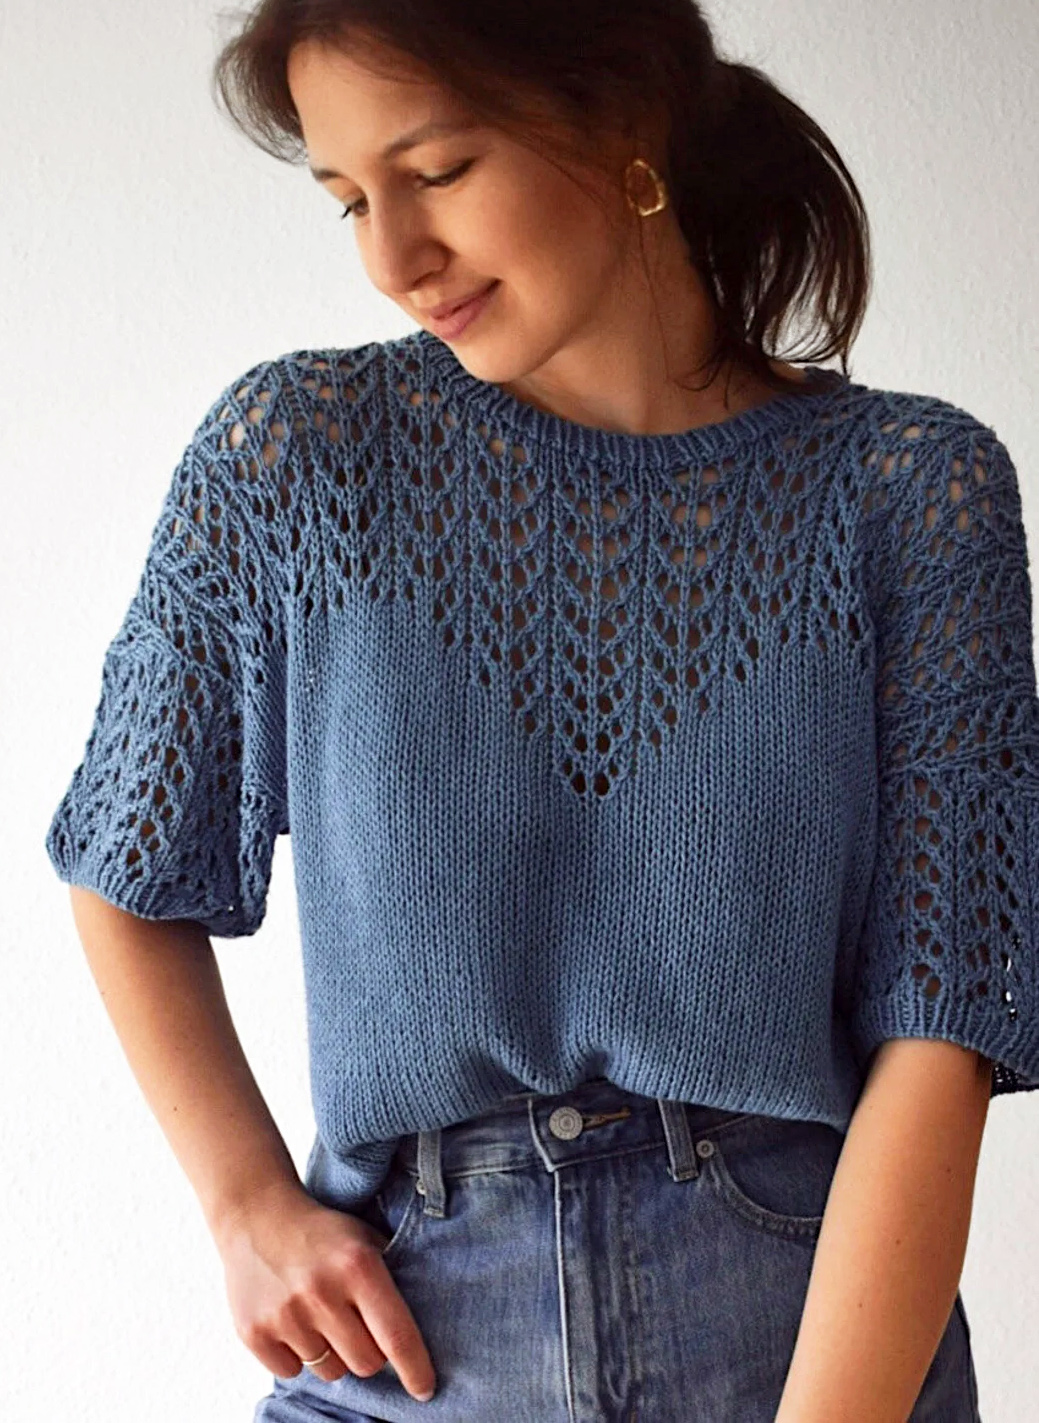 Provence Tee Sweater Knitting Pattern